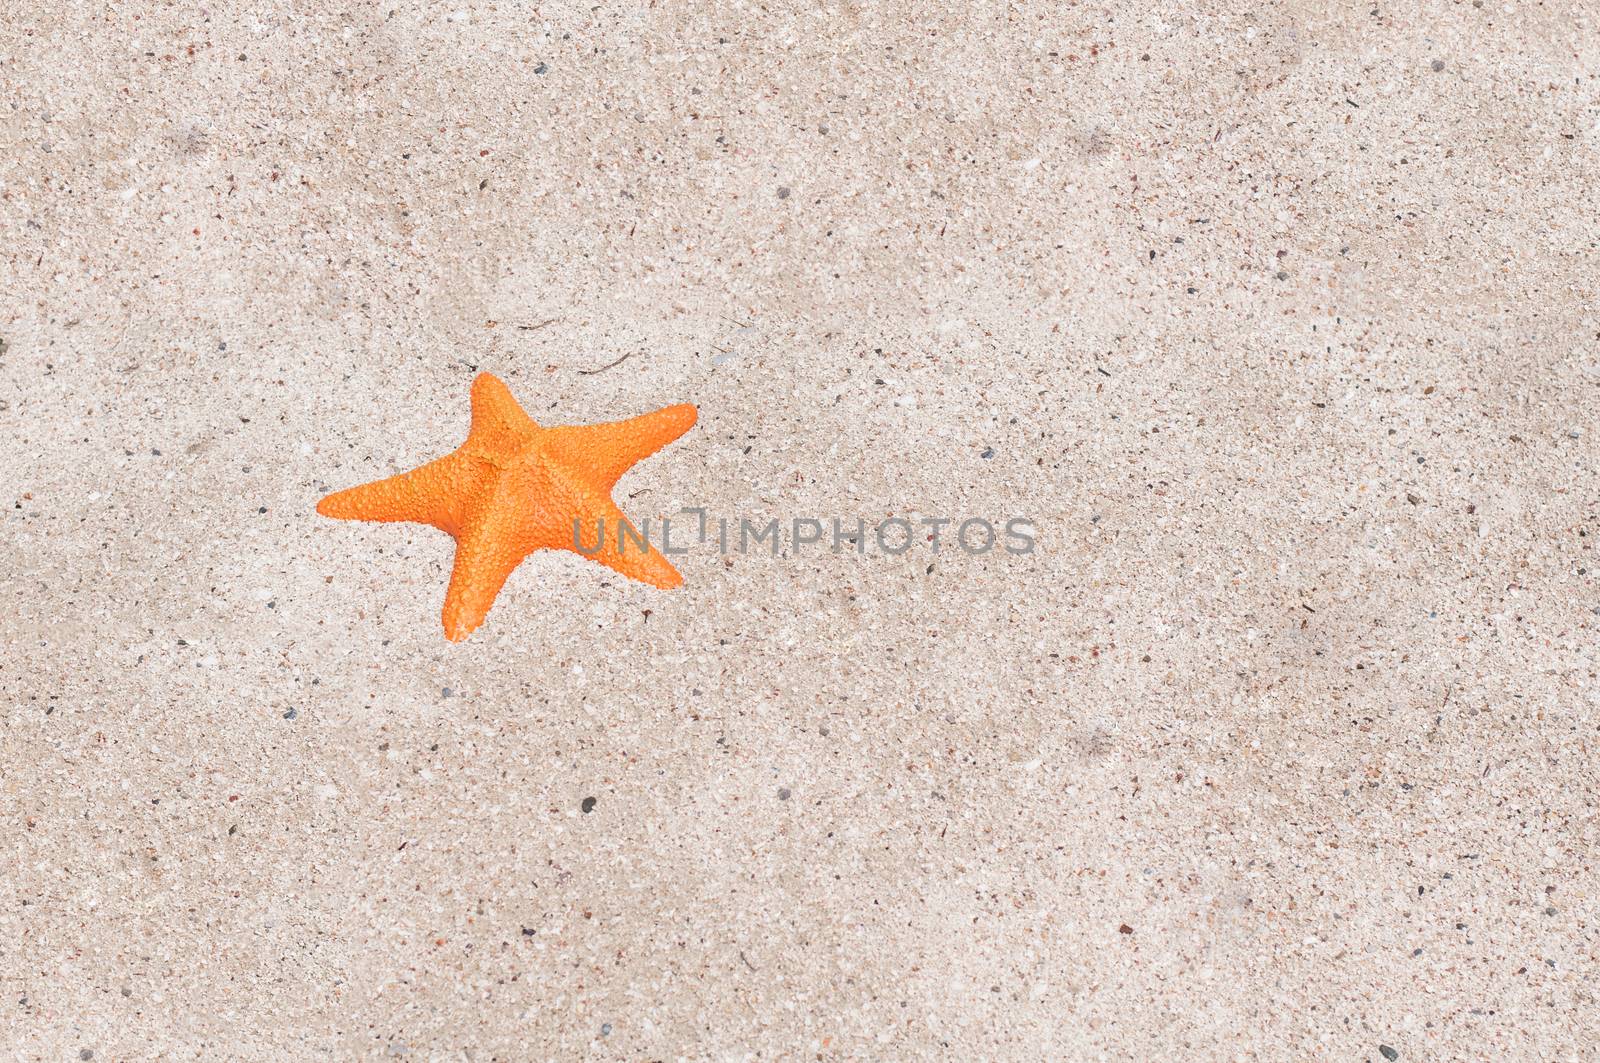 A sea orange star on the beach